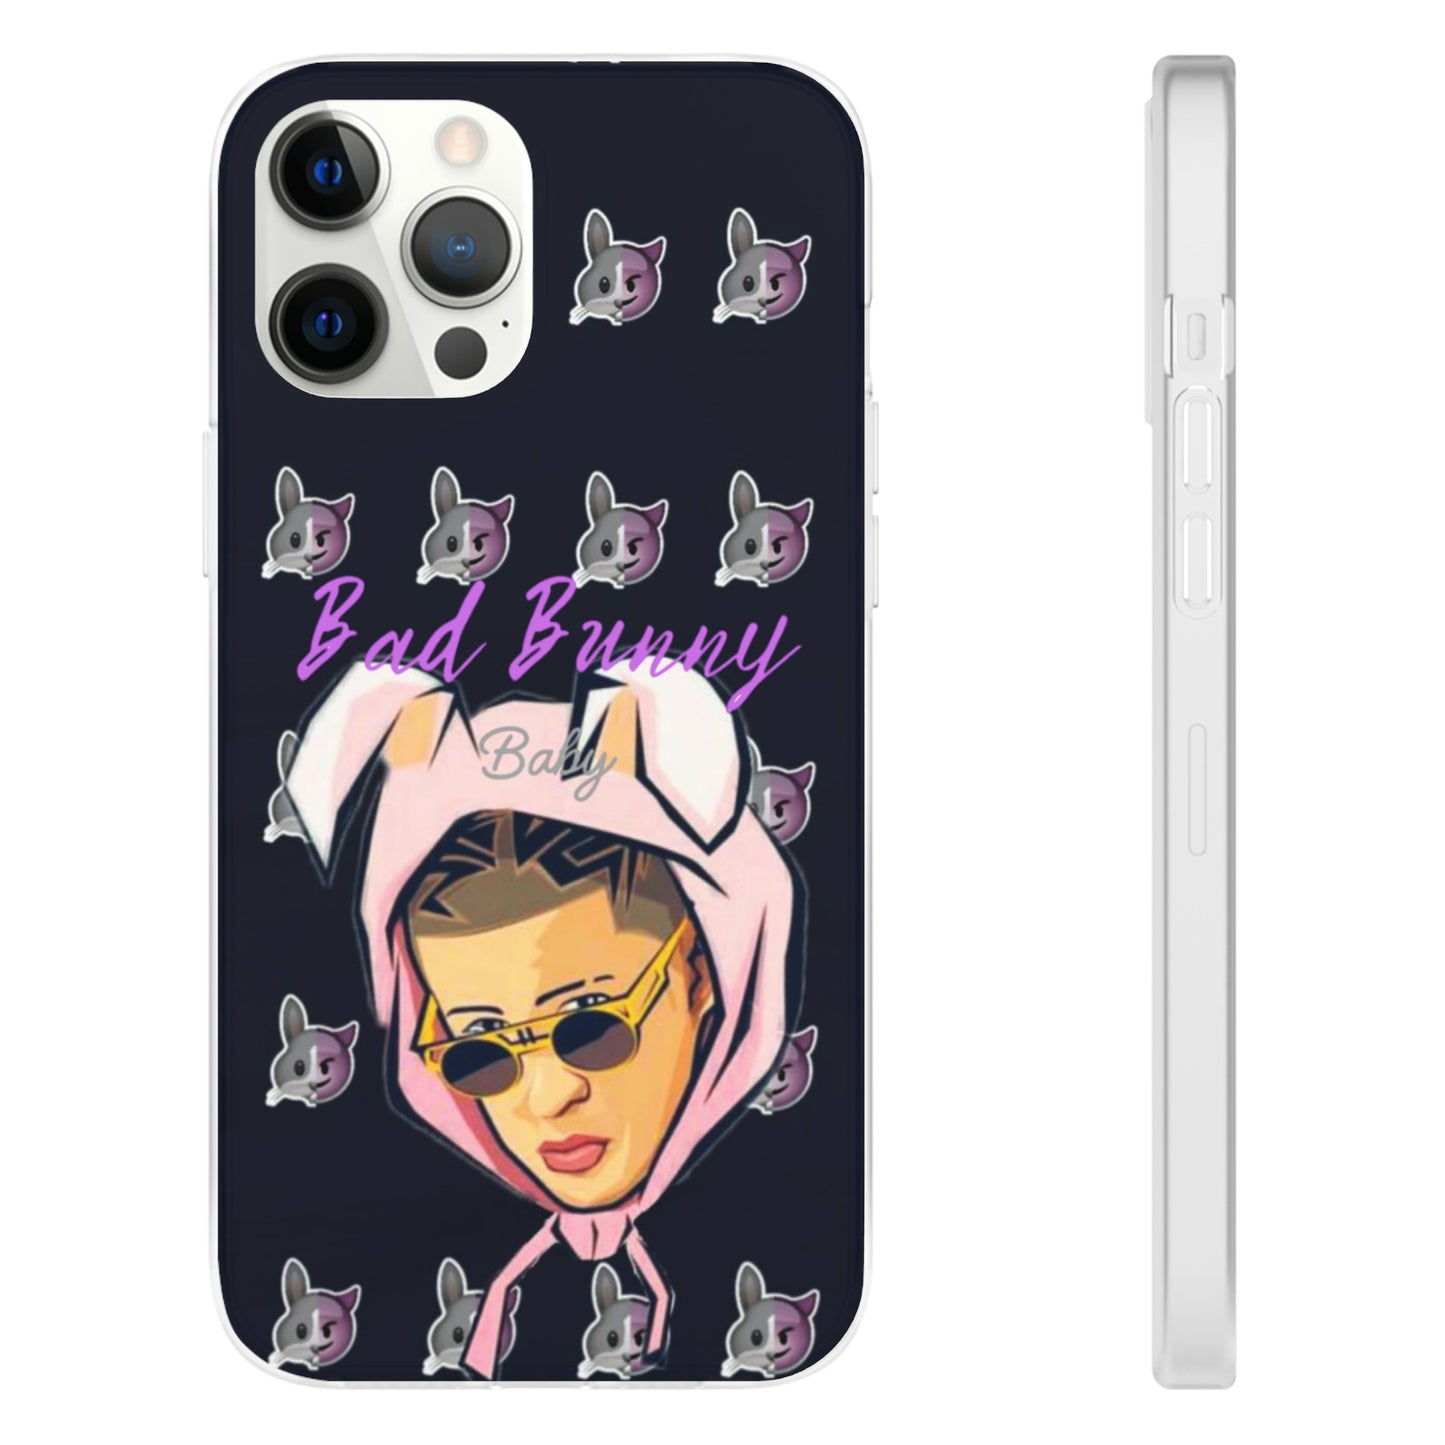 Bad Bunny iPhone Case - Alex's Store - iPhone 12 Pro Max - 